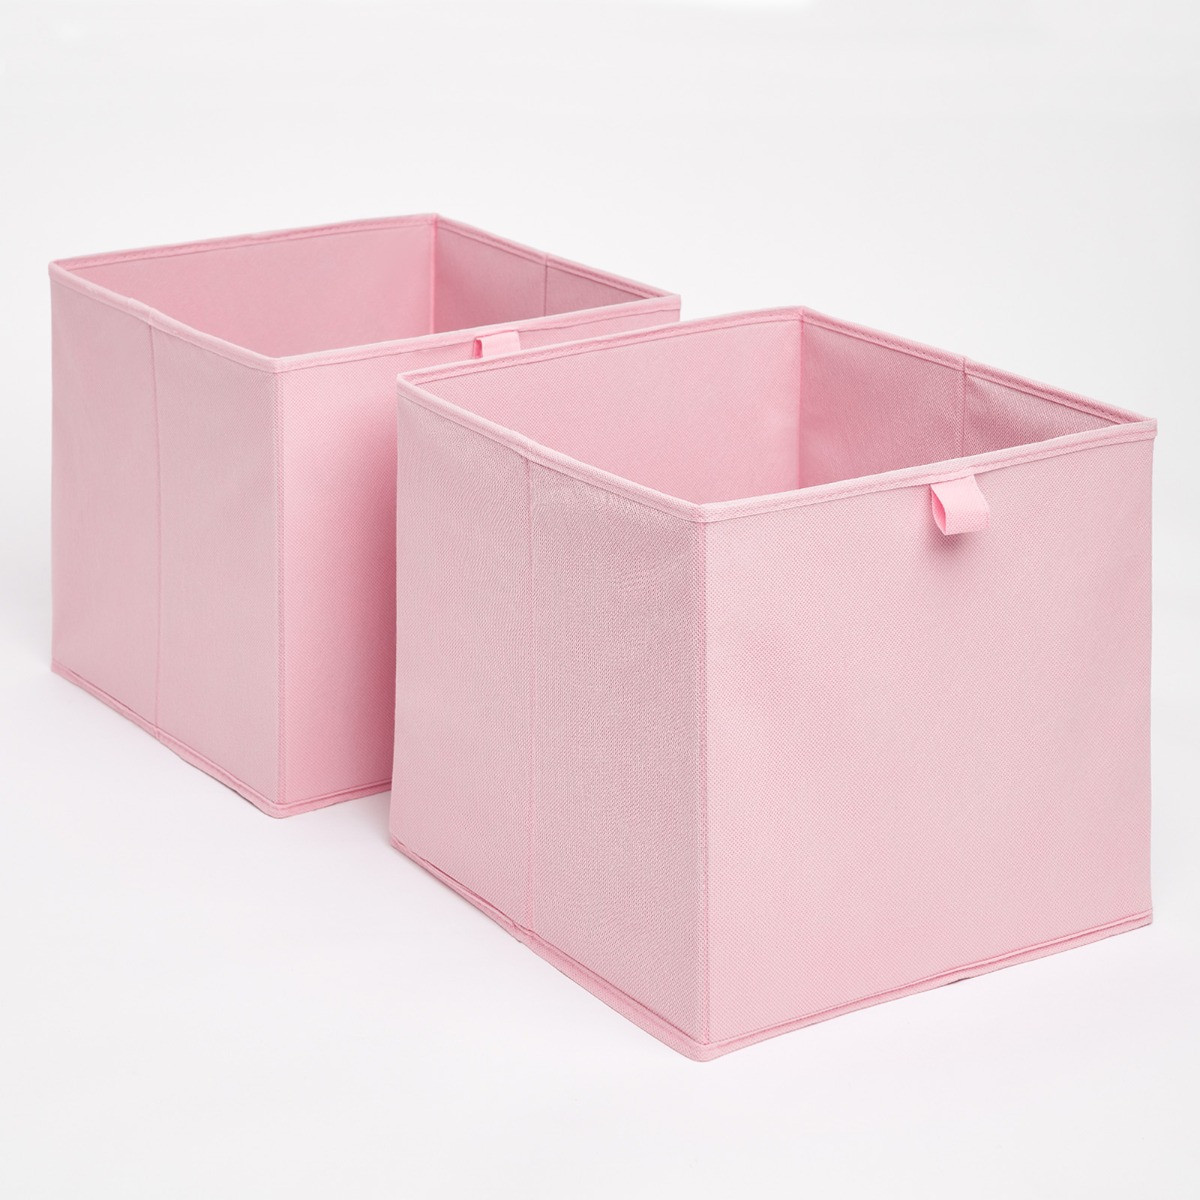 OHS Plain Cube Storage Boxes, Blush - 2 pack>